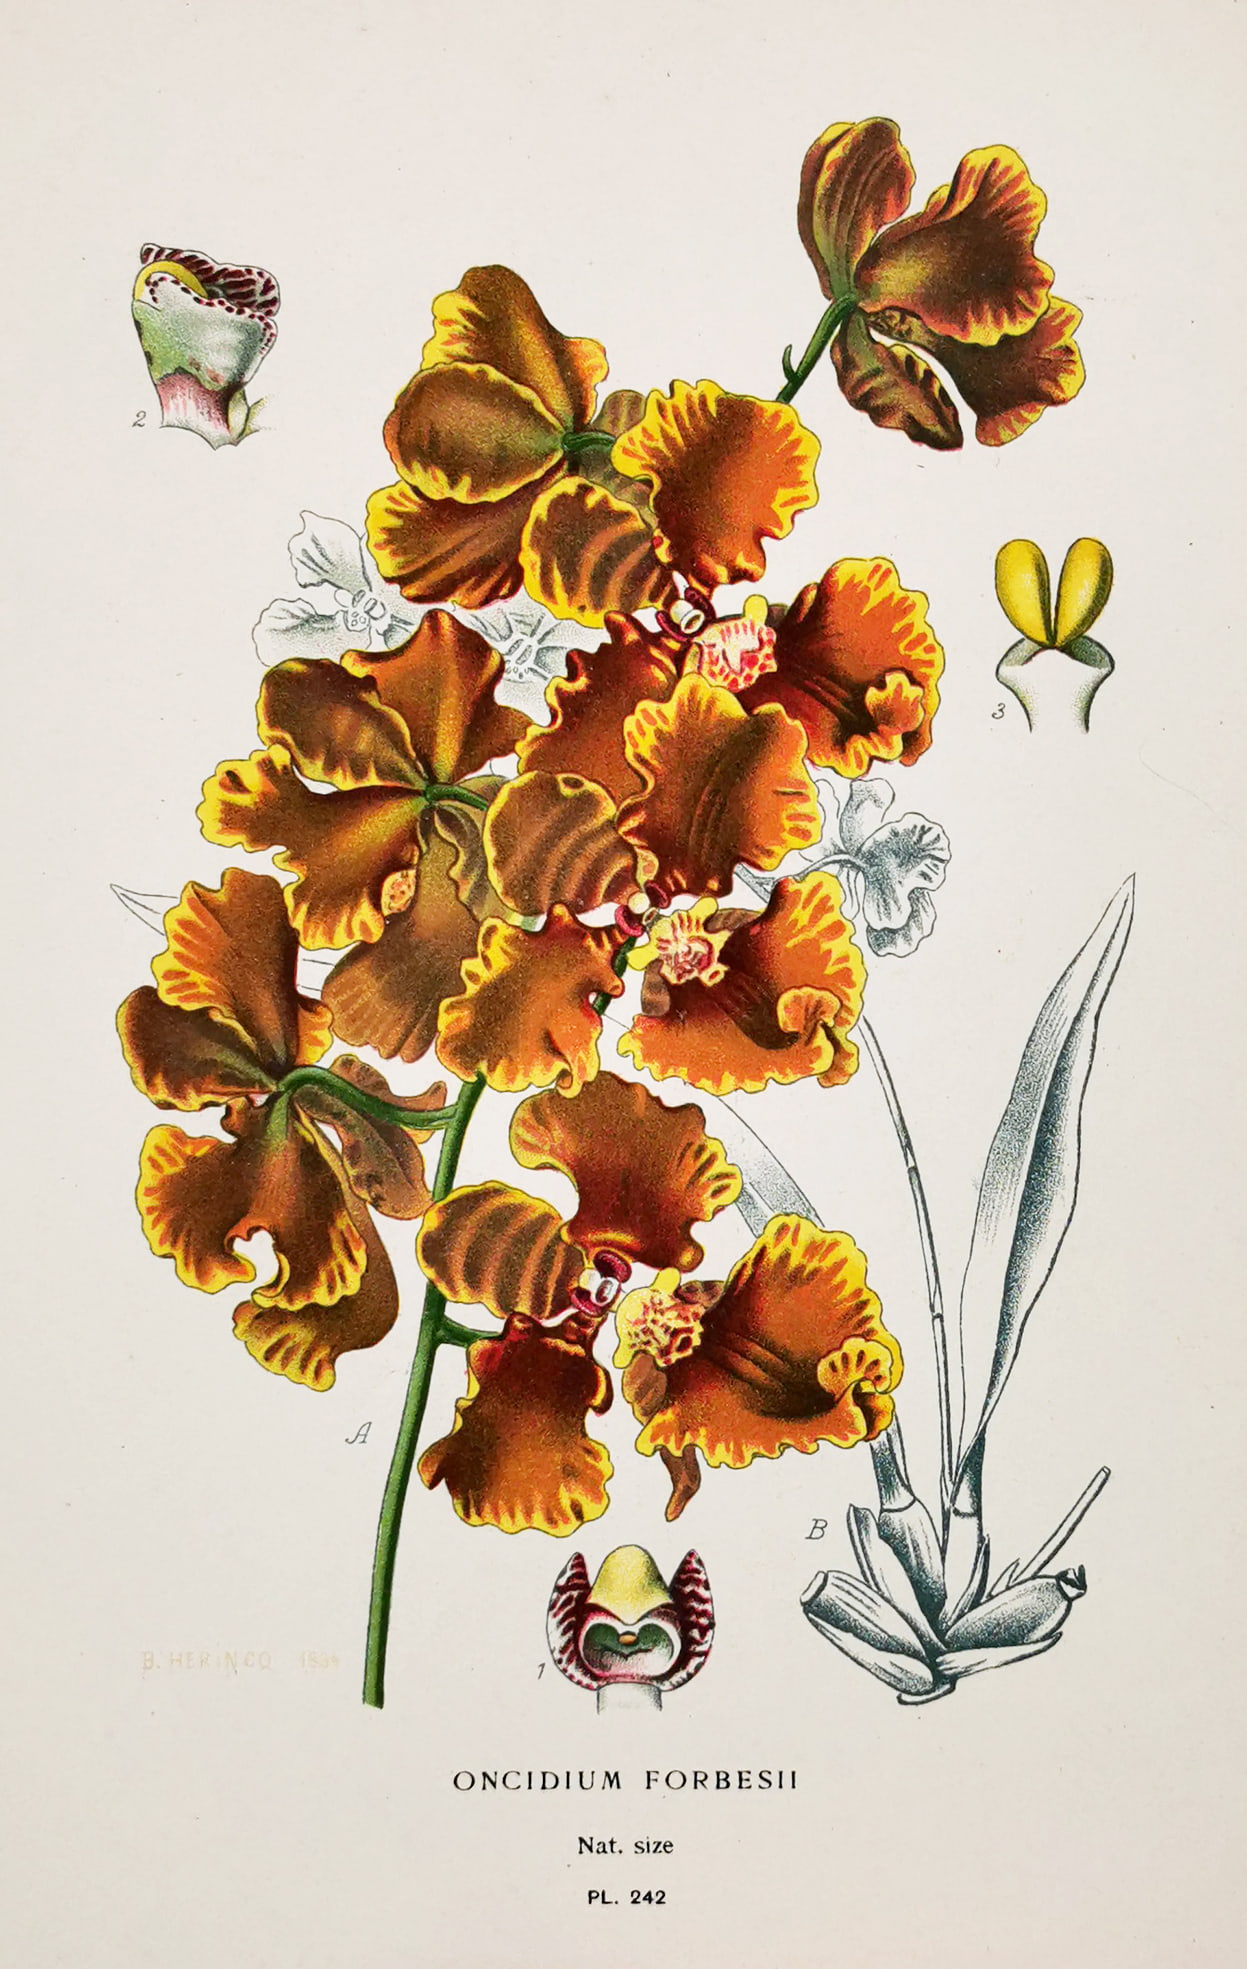 Oncidium Forbesii. - Antique Print from 1896